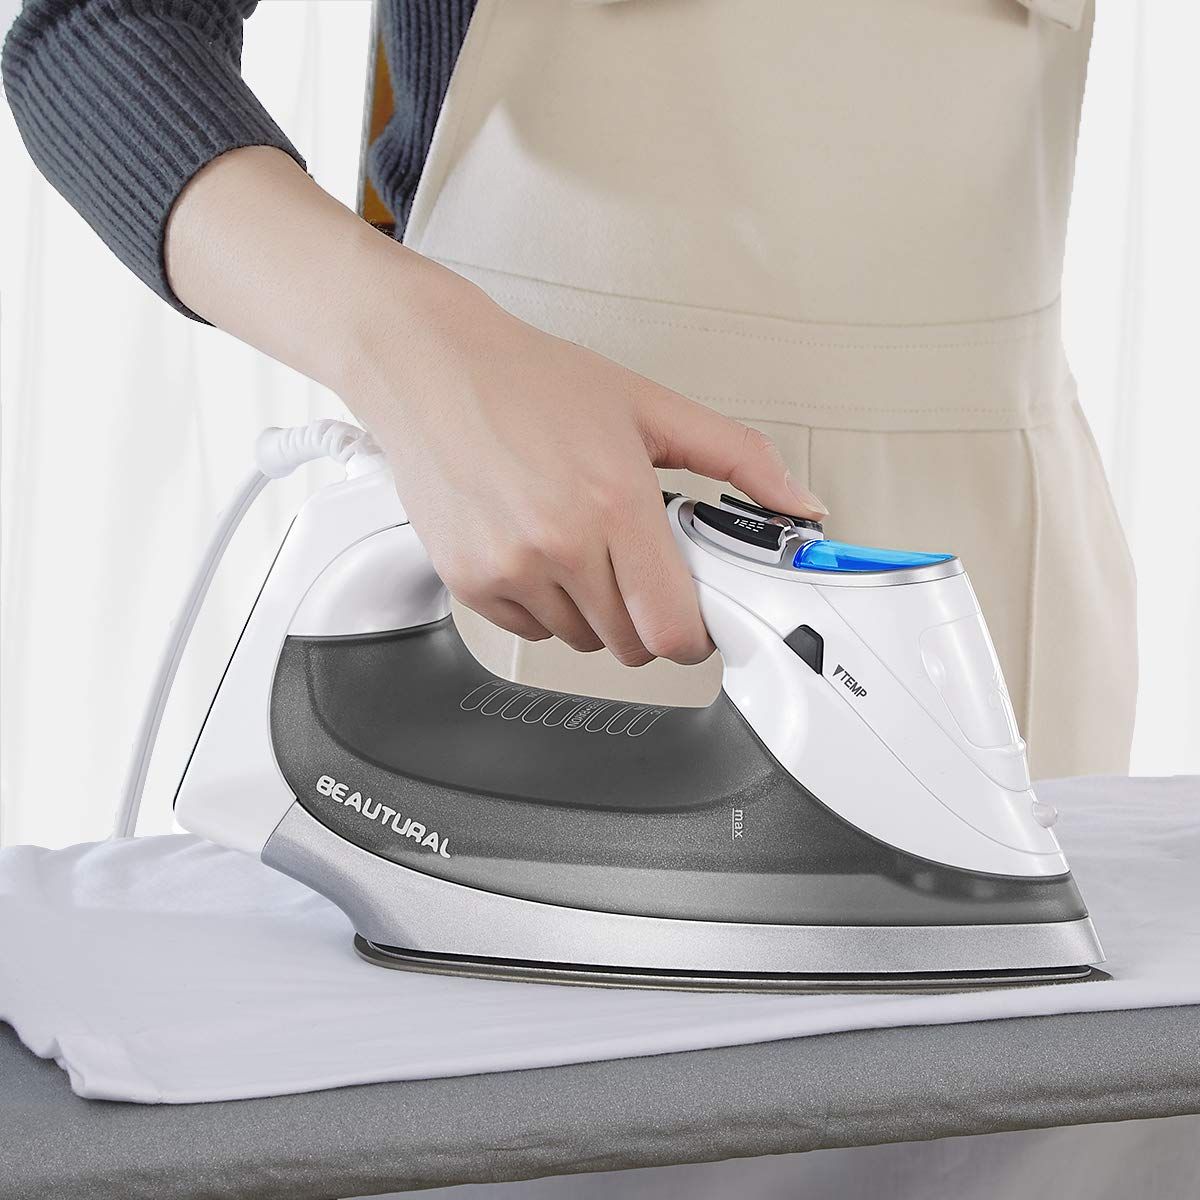 паровой утюг steam ironing фото 84